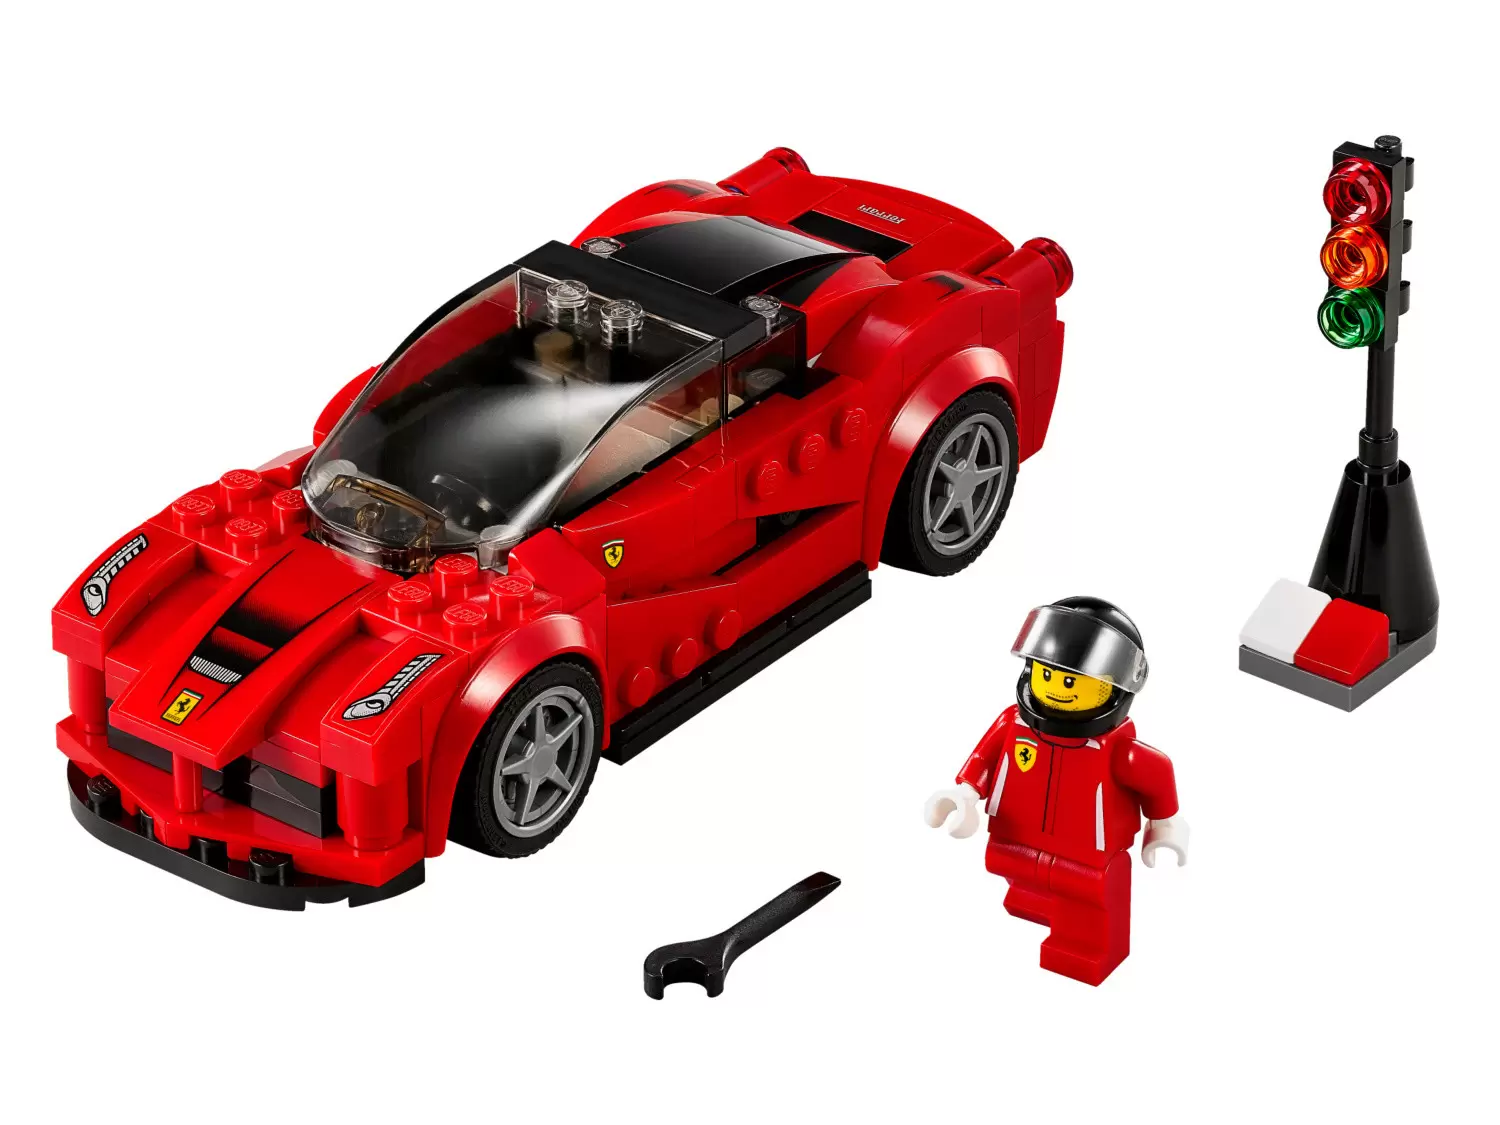 LEGO Speed Champions - LaFerrari